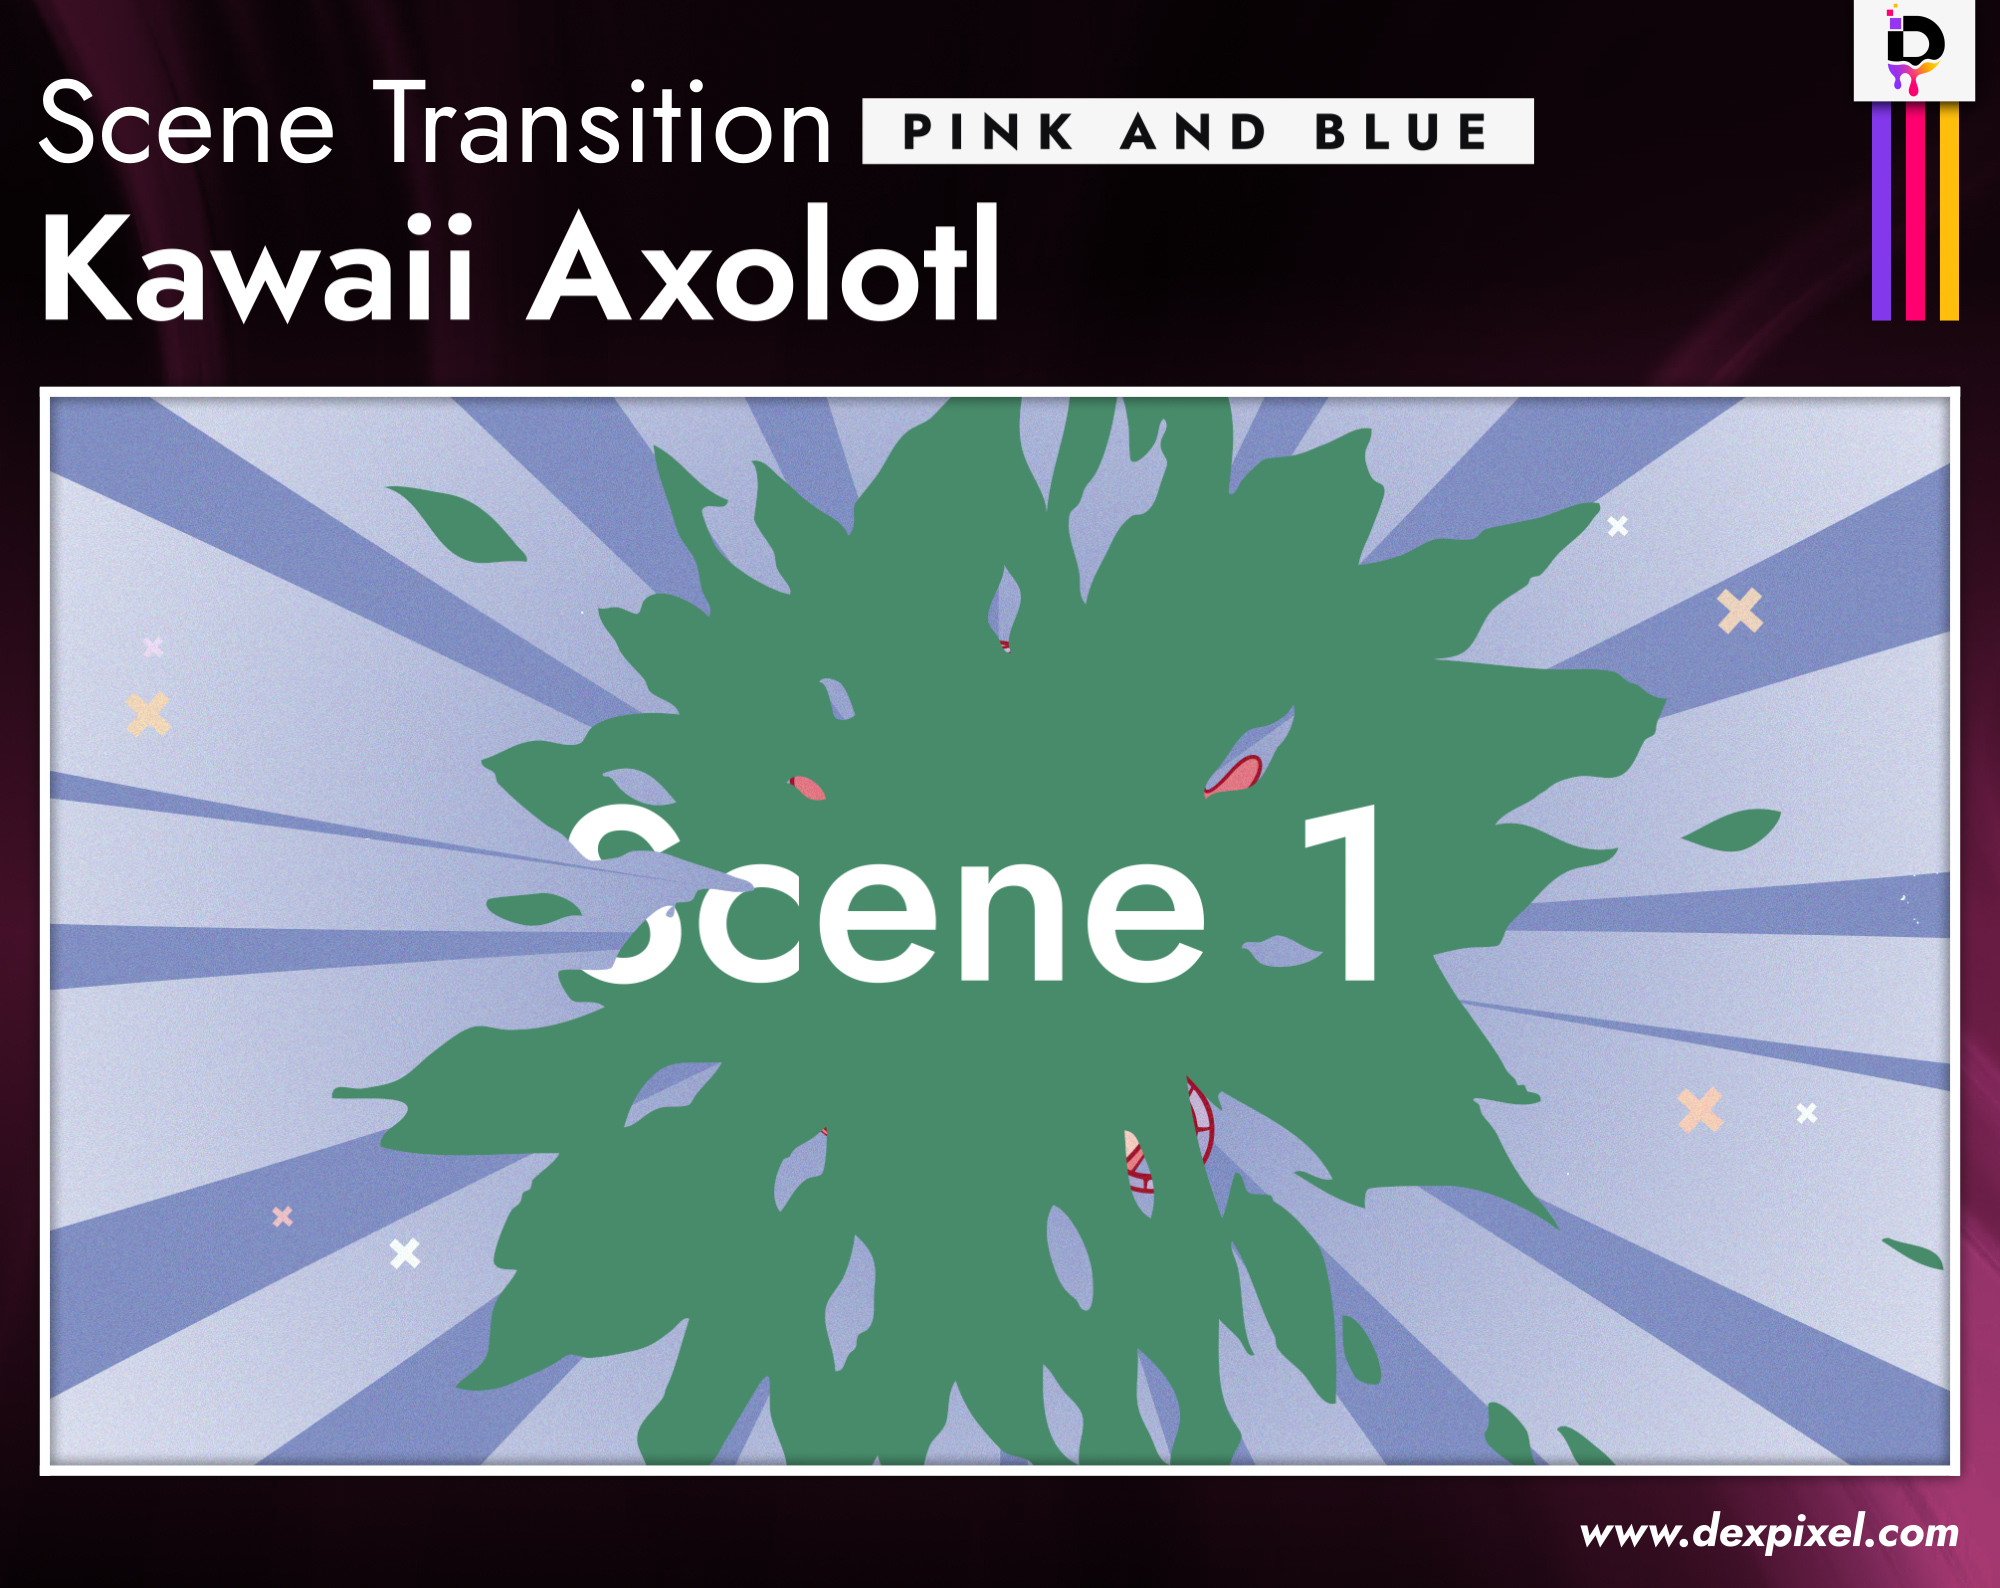 Scene Transition Dexpixel 4 Kawaii Axolotl Pink And Blue